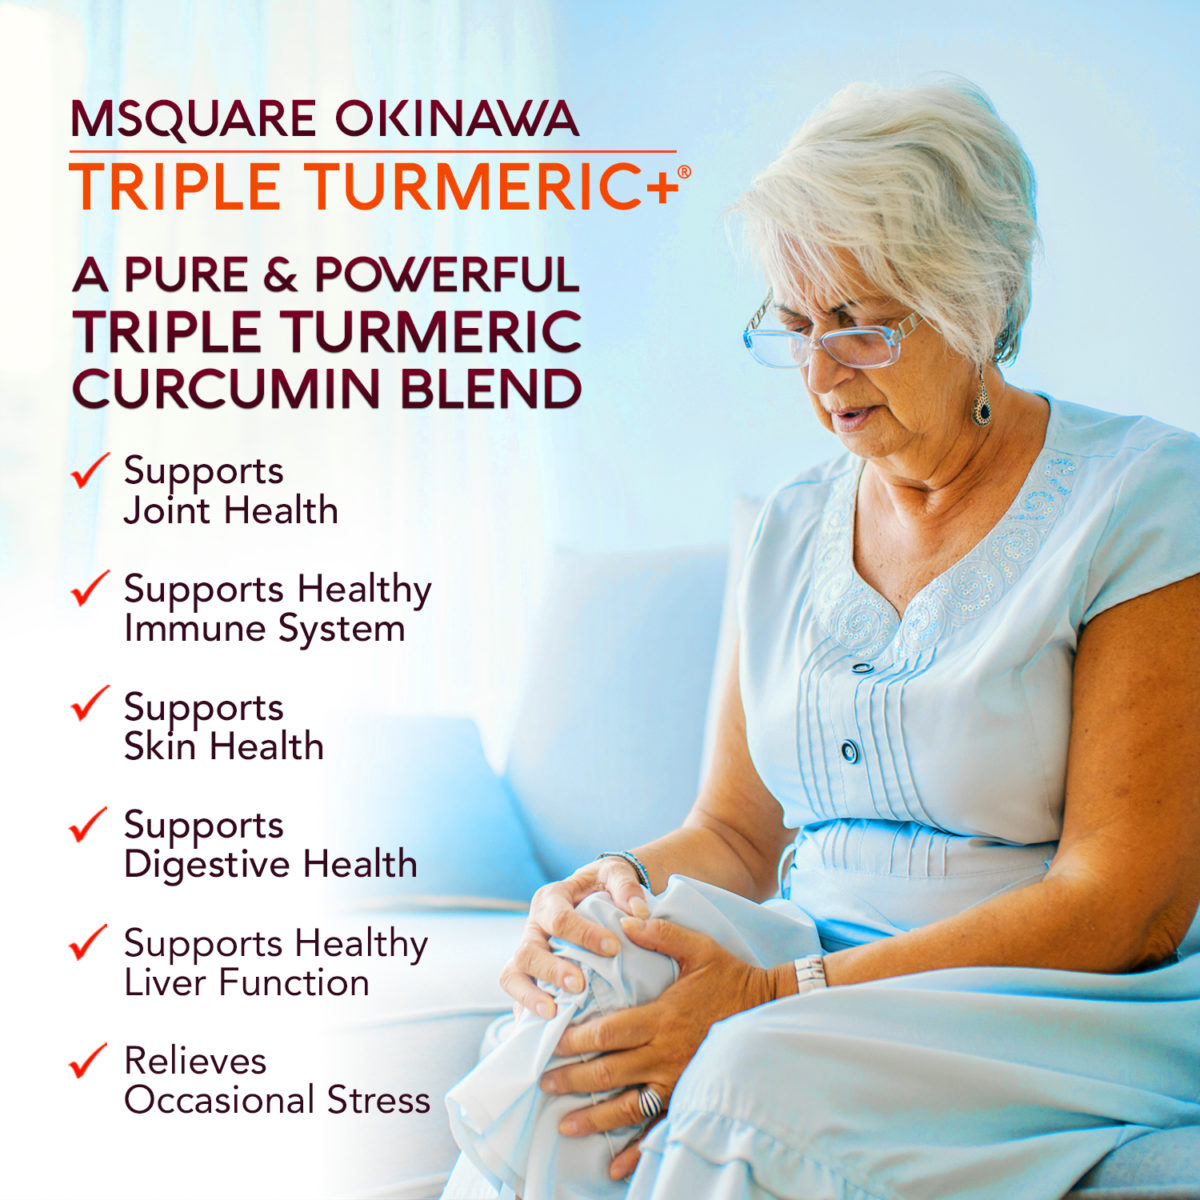 MSquare Okinawa Triple Turmeric + Senior Product Benefits